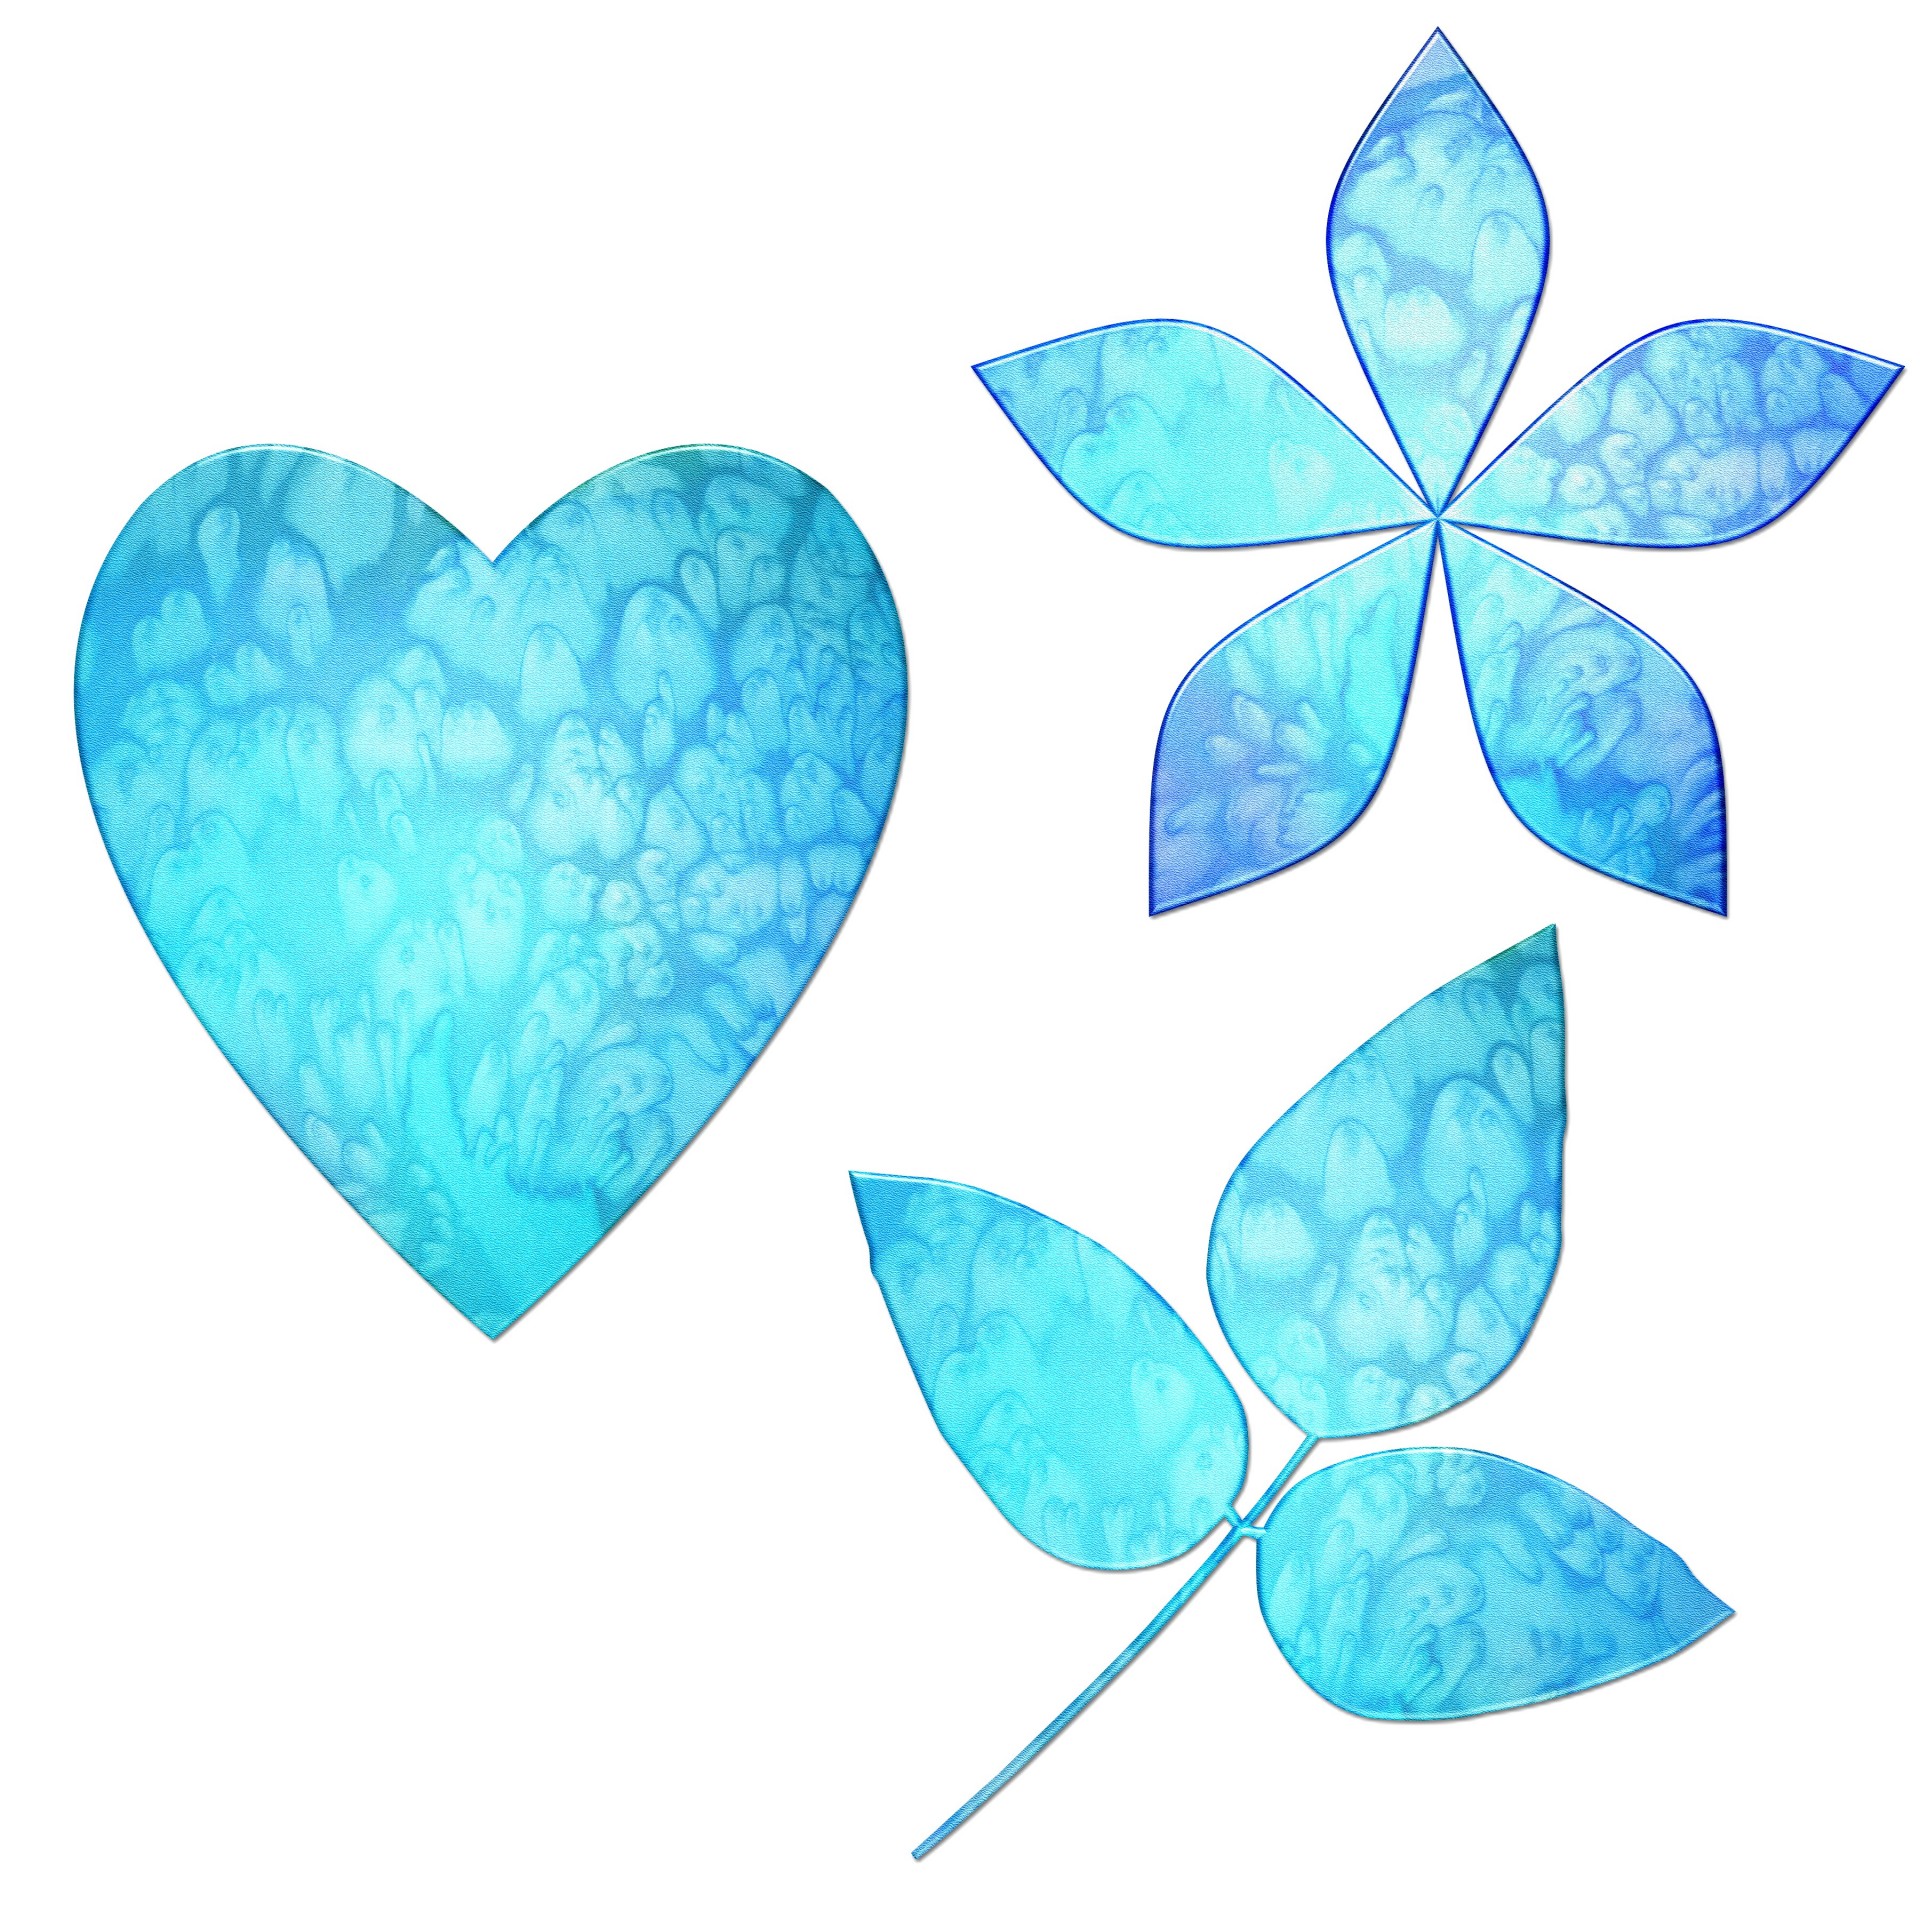 Turquoise Heart Image 